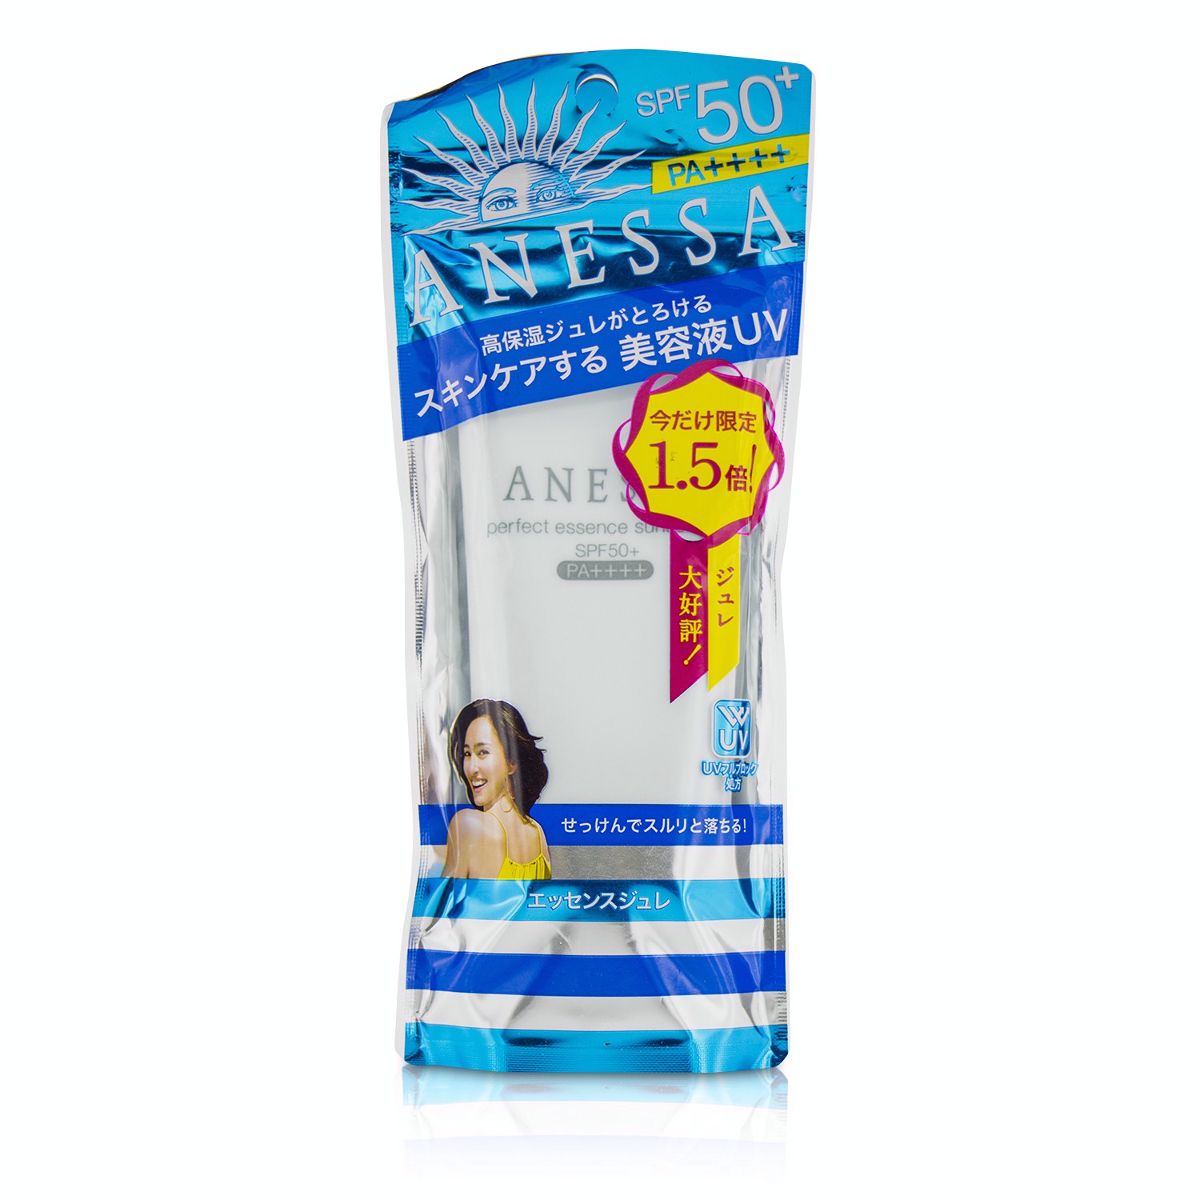 Anessa Perfect Essence Sunscreen SPF 50+ PA++++ Shiseido Image